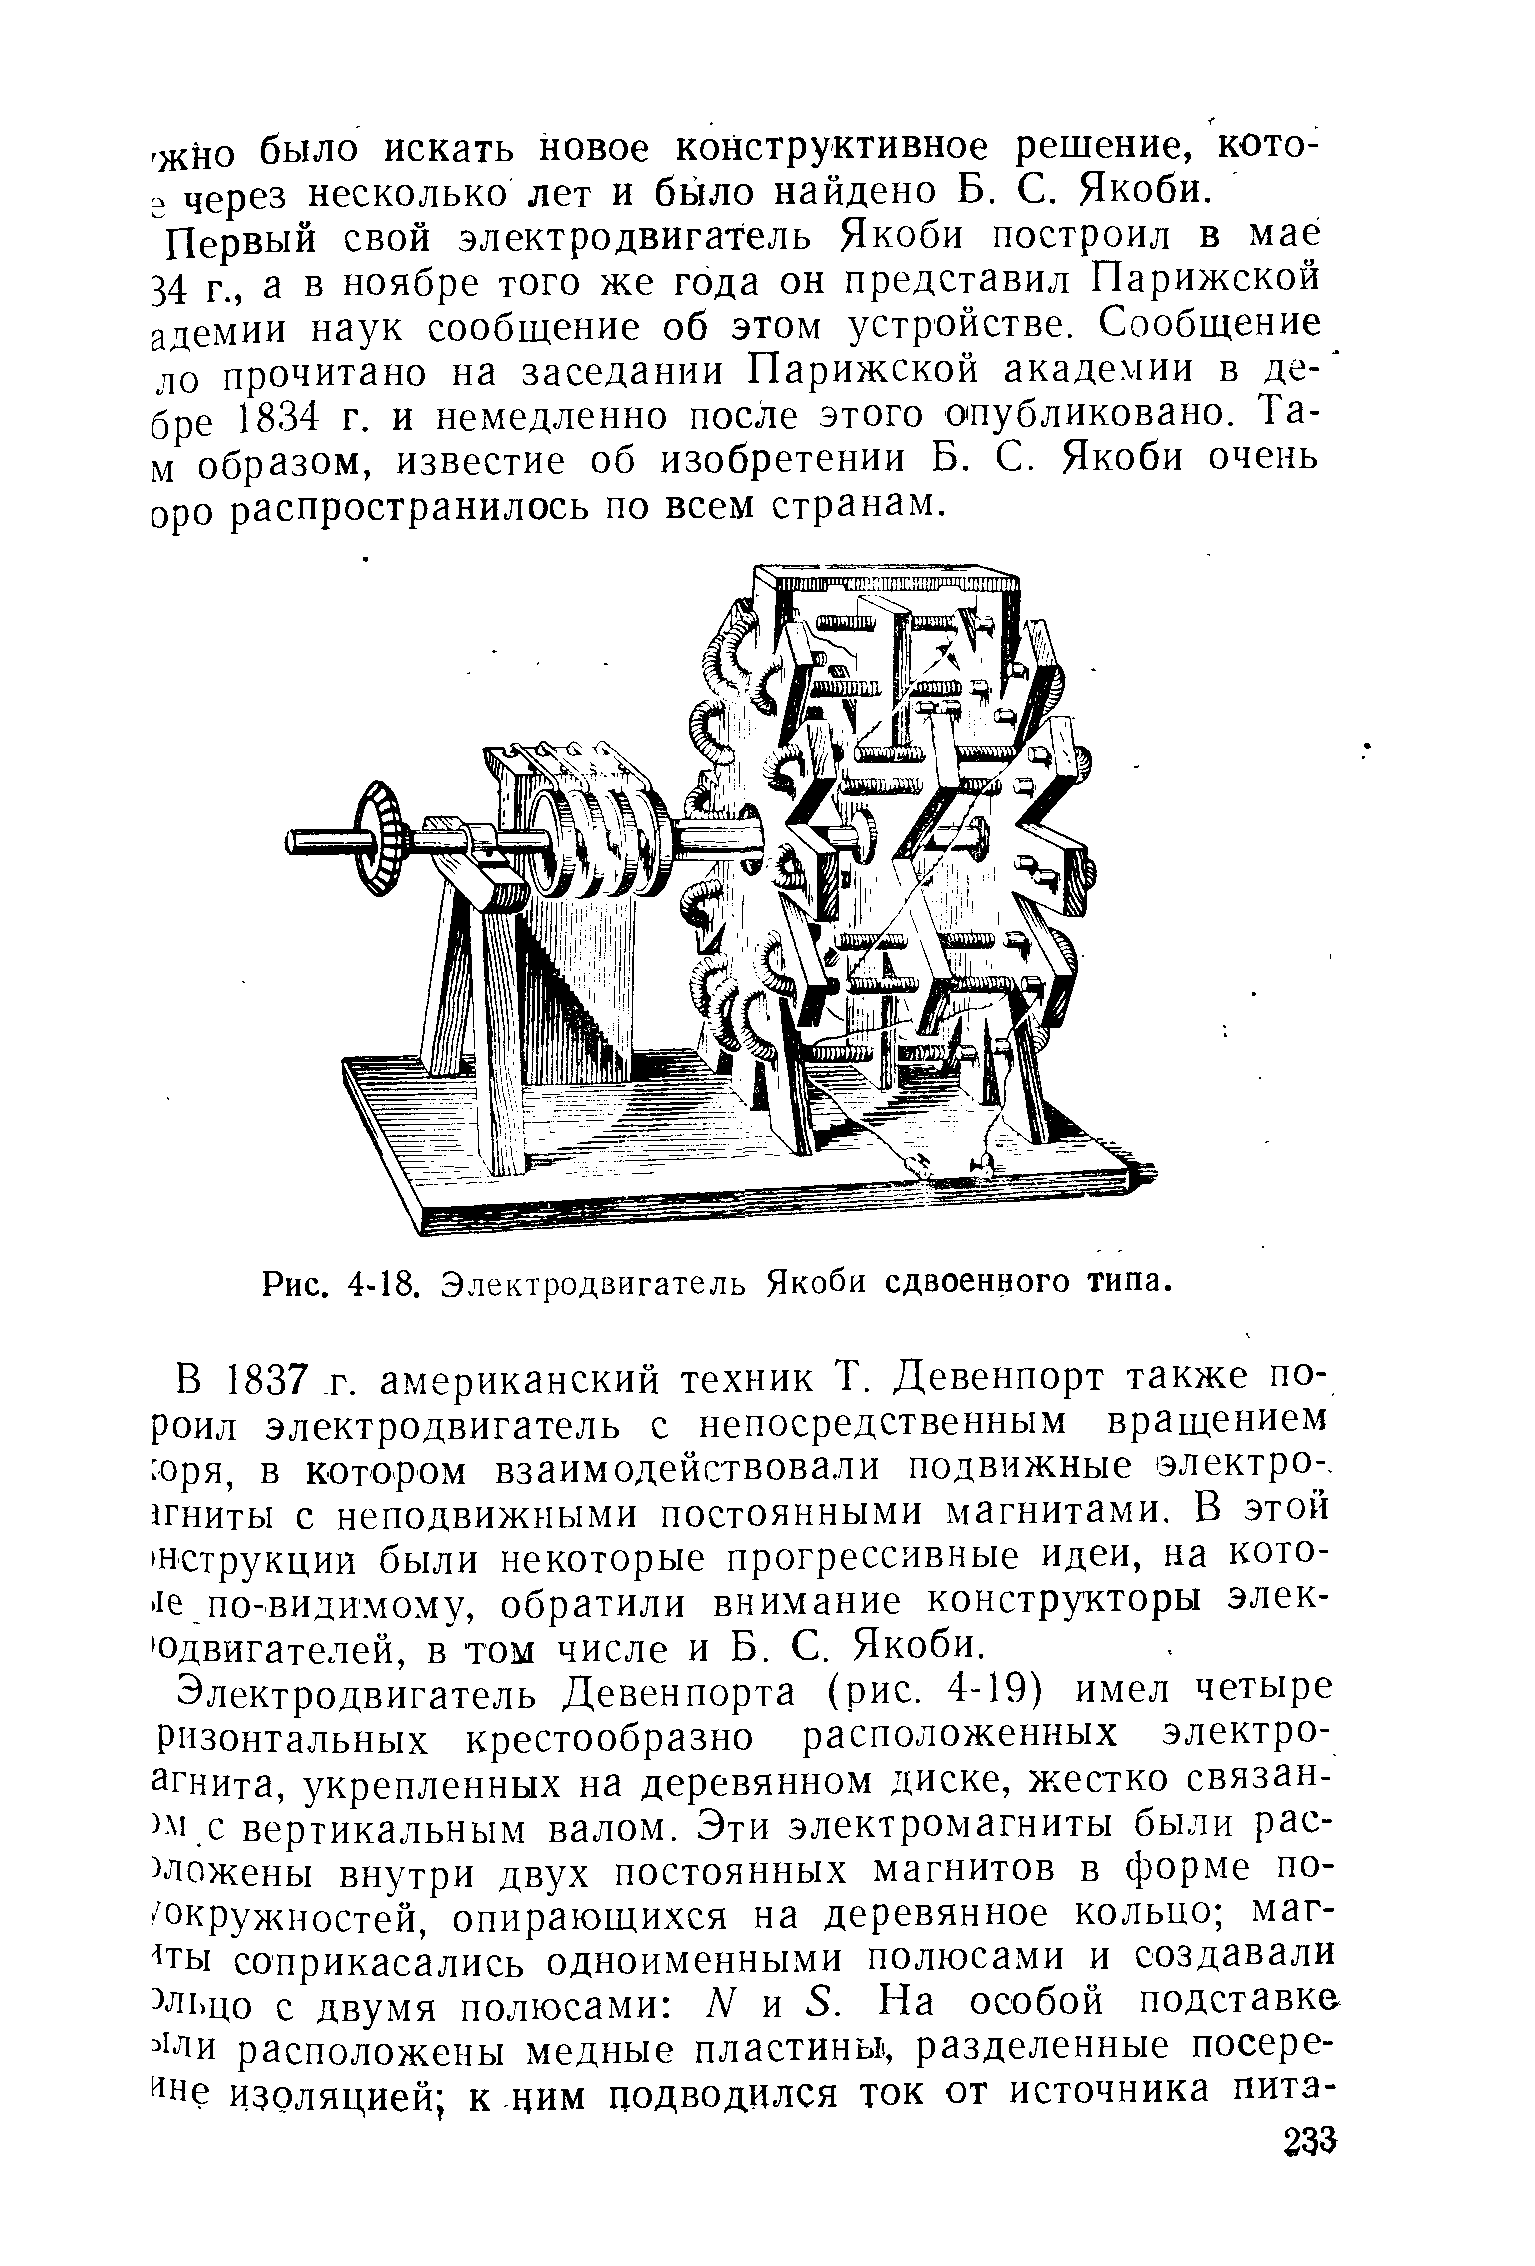 Рис. 4-18. Электродвигатель Якоби сдвоенного типа.
